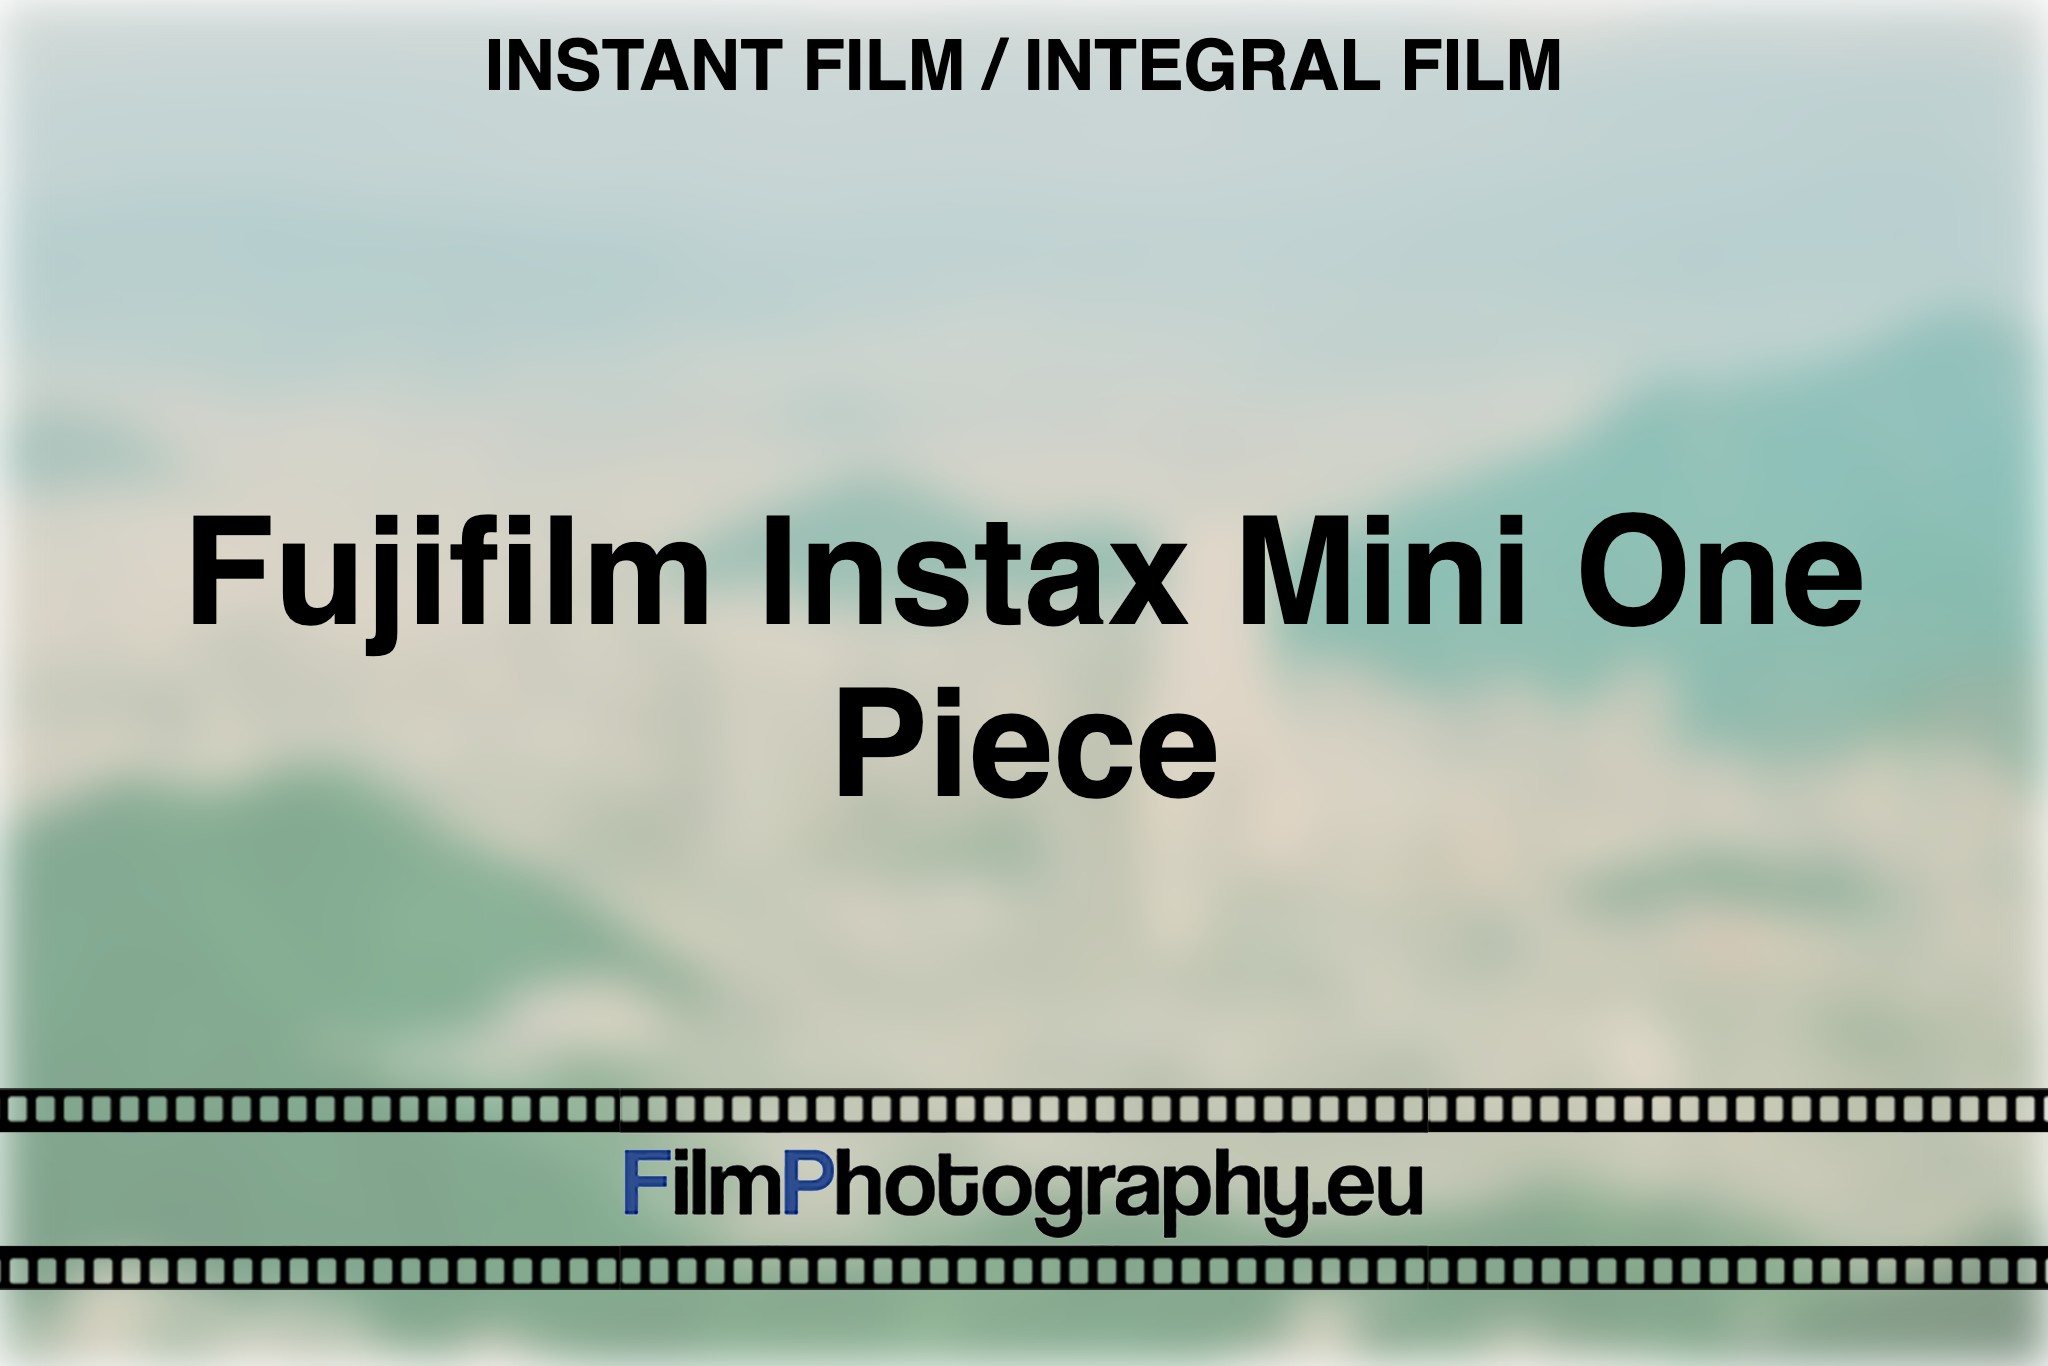 fujifilm-instax-mini-one-piece-instant-film-integral-film-bnv